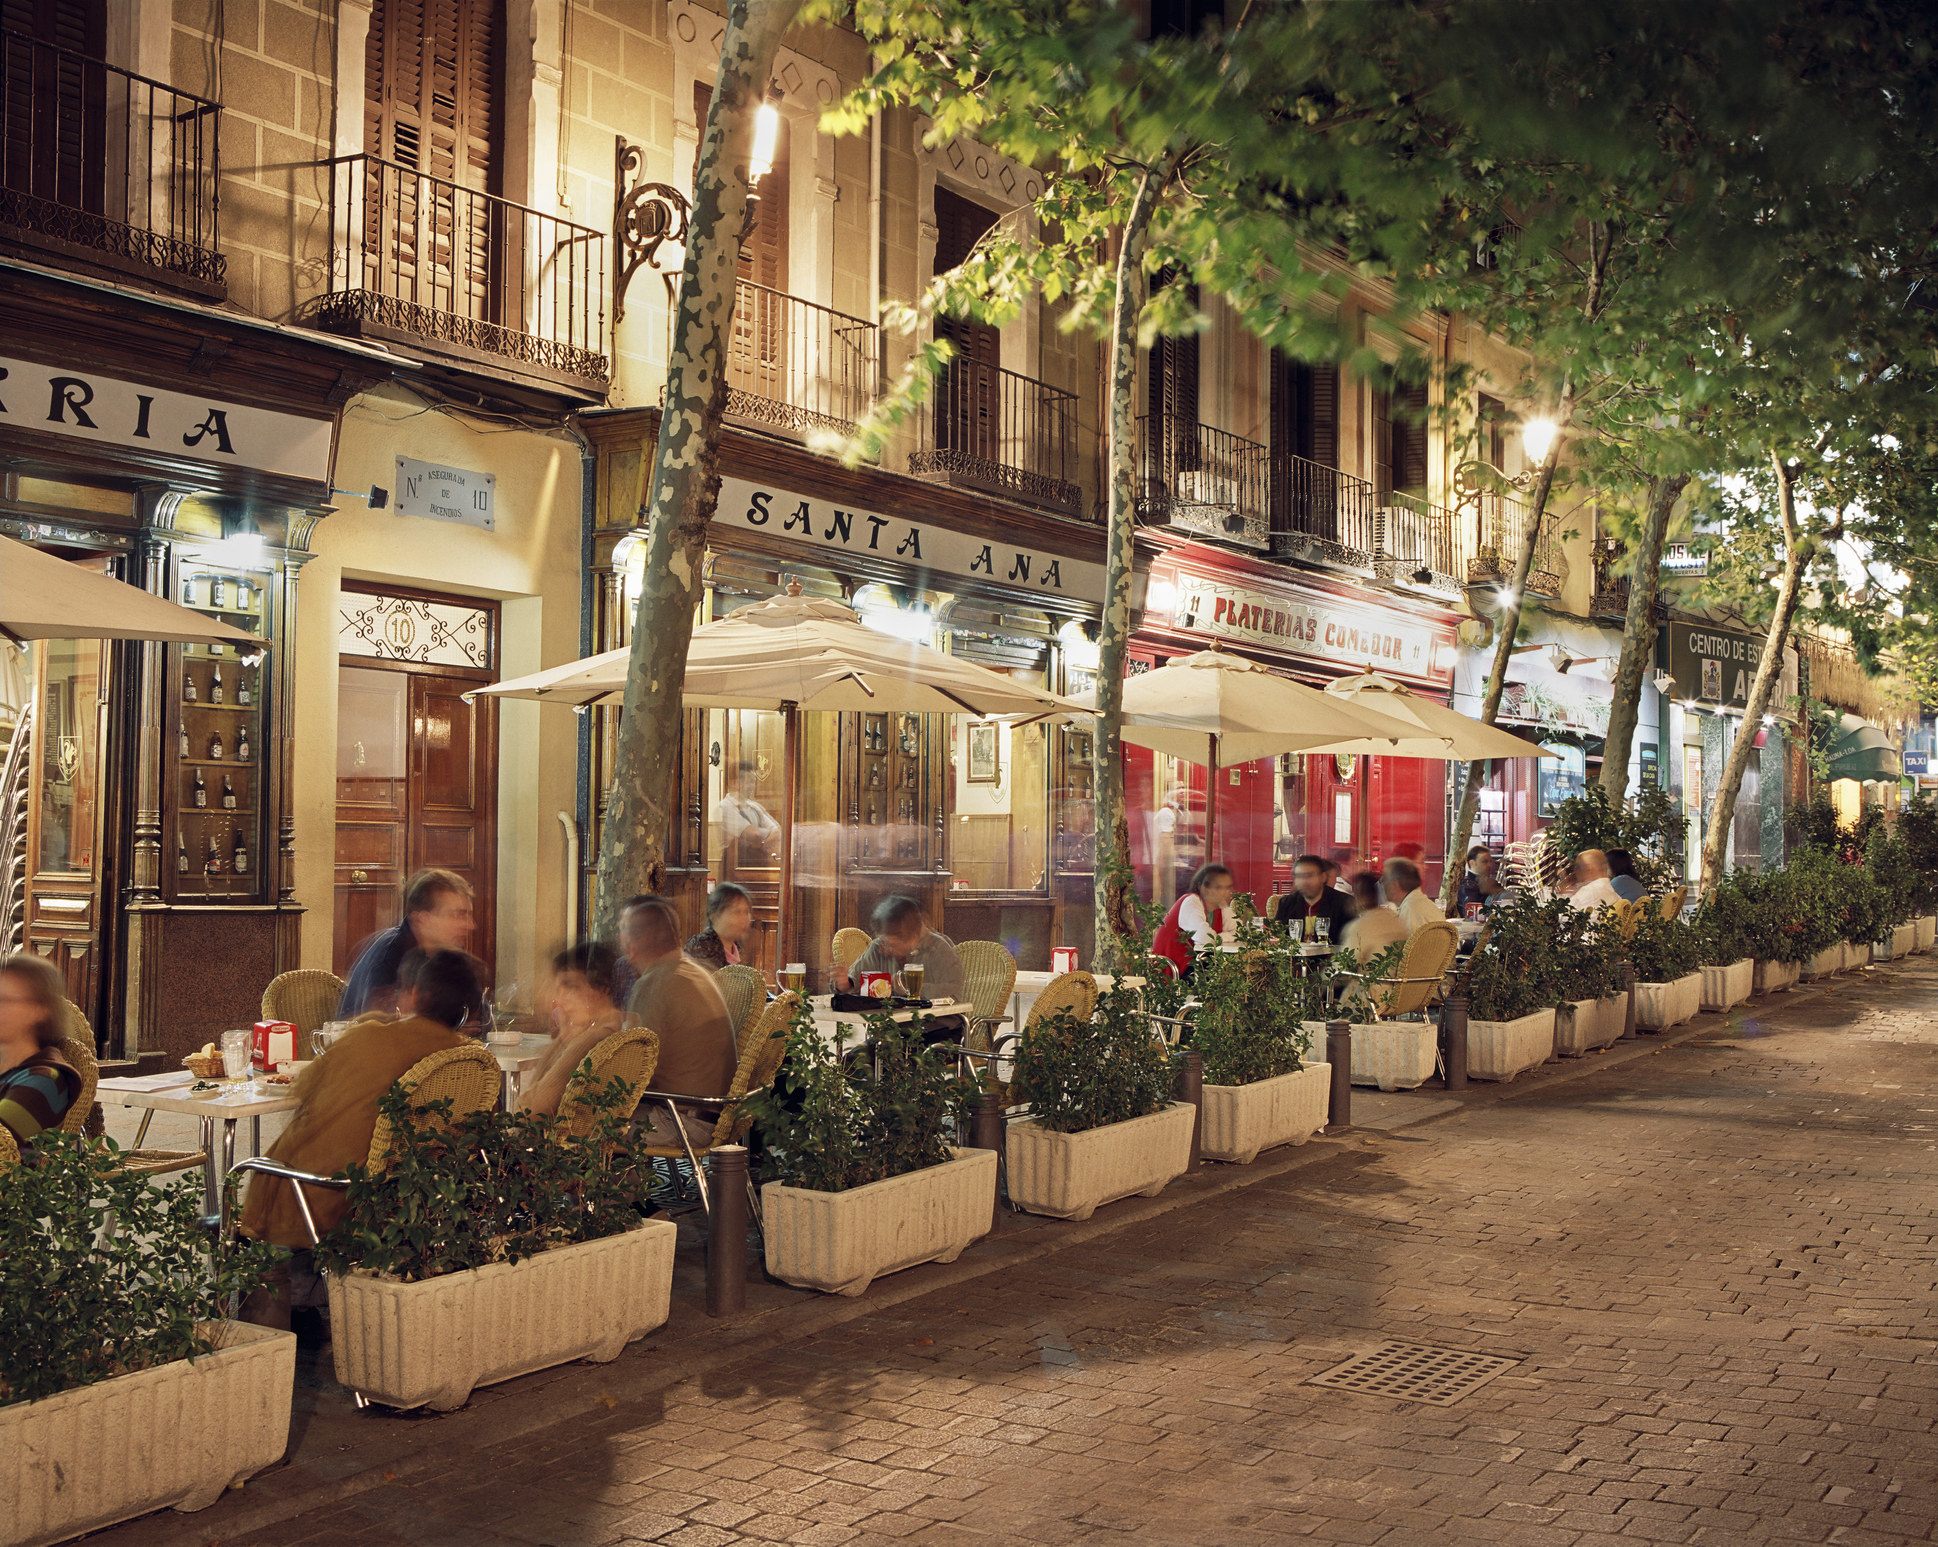 A row of Spanish restaurants at night.